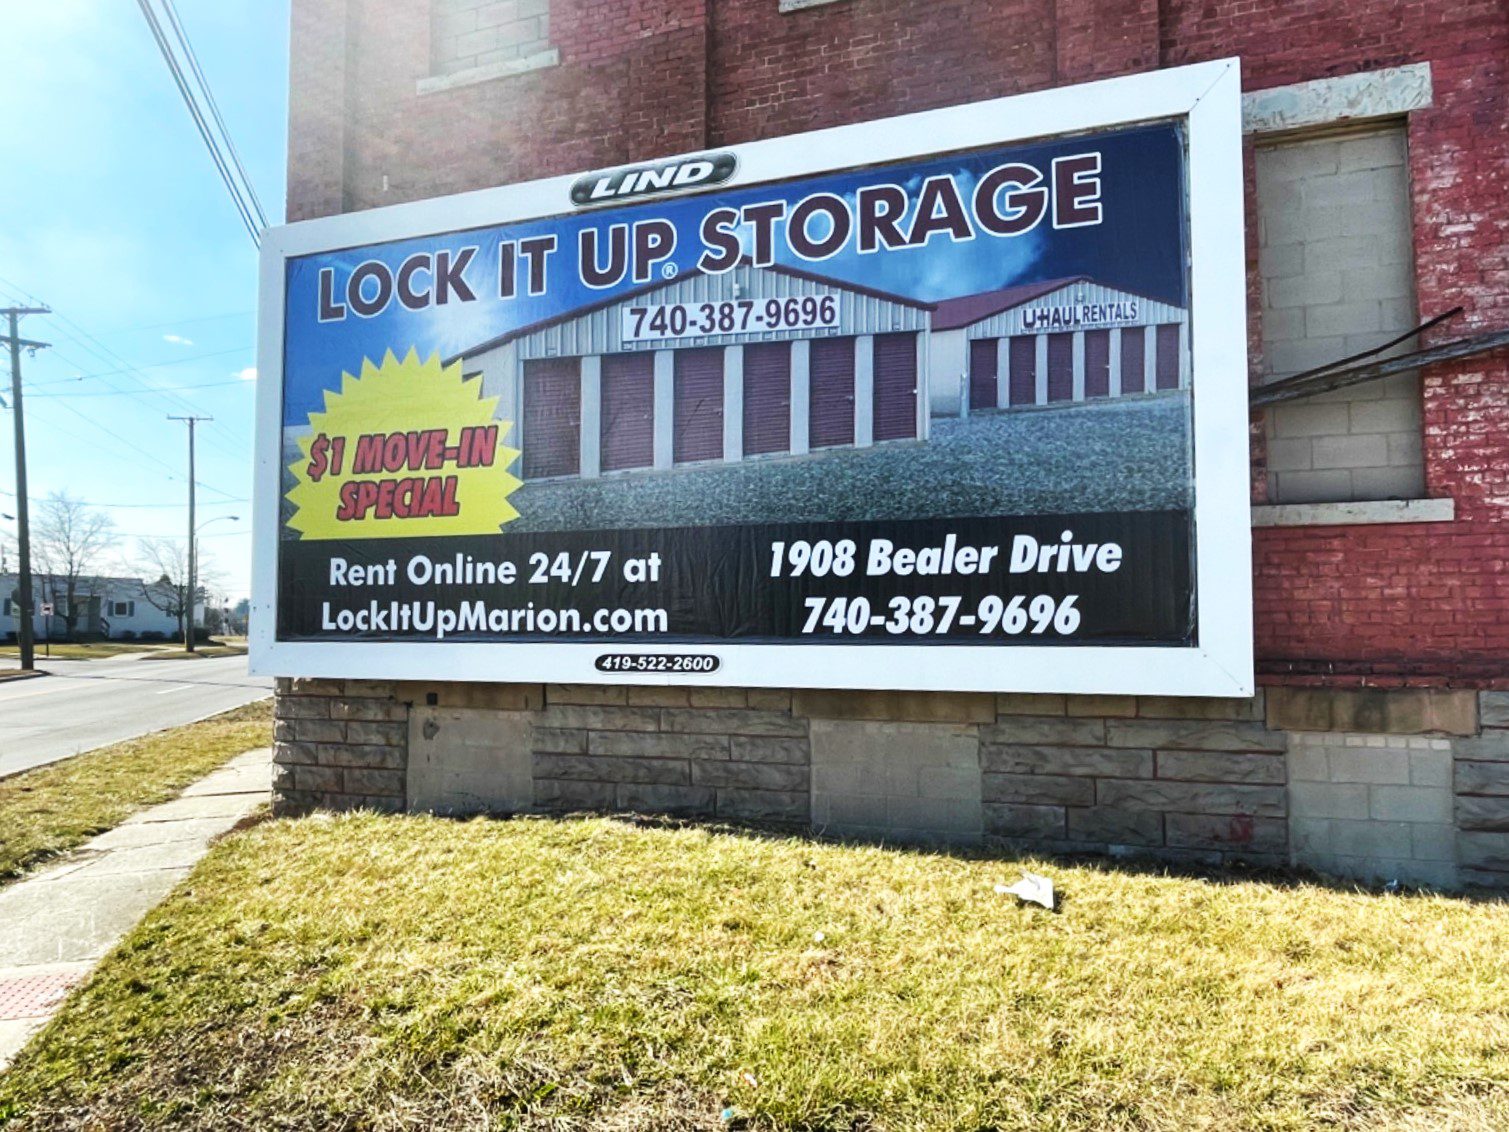 Lock It Up Storage billboard, storage unit billboard, storage units